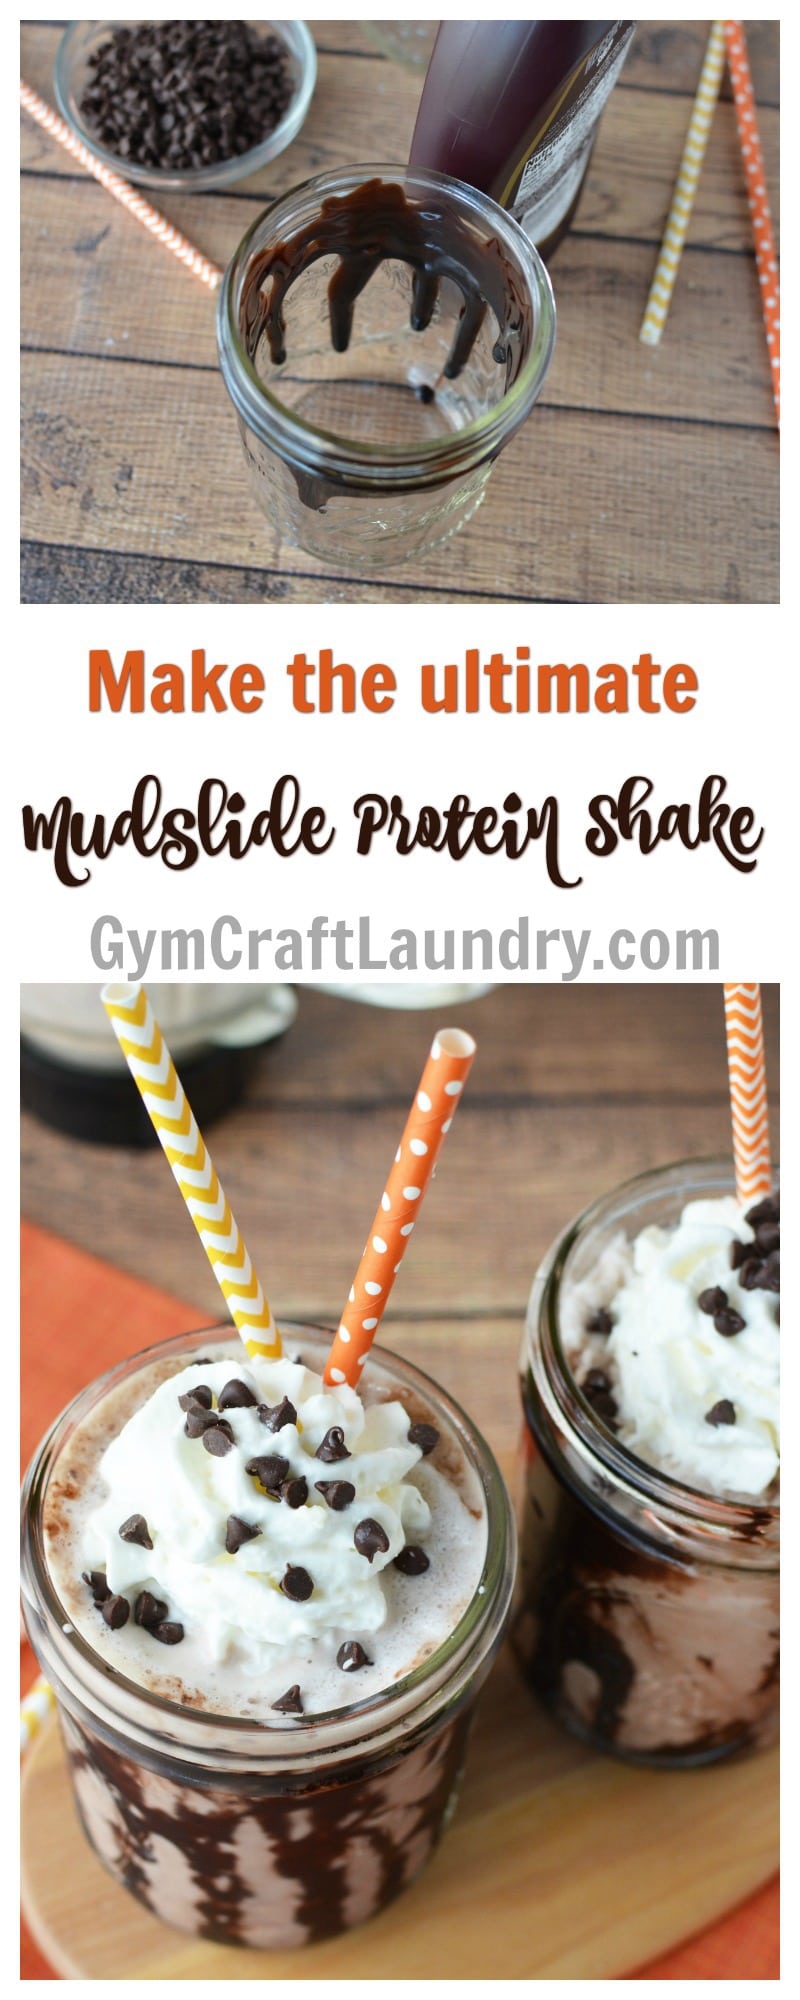 Make the ultimate Mudslide Protein Shake